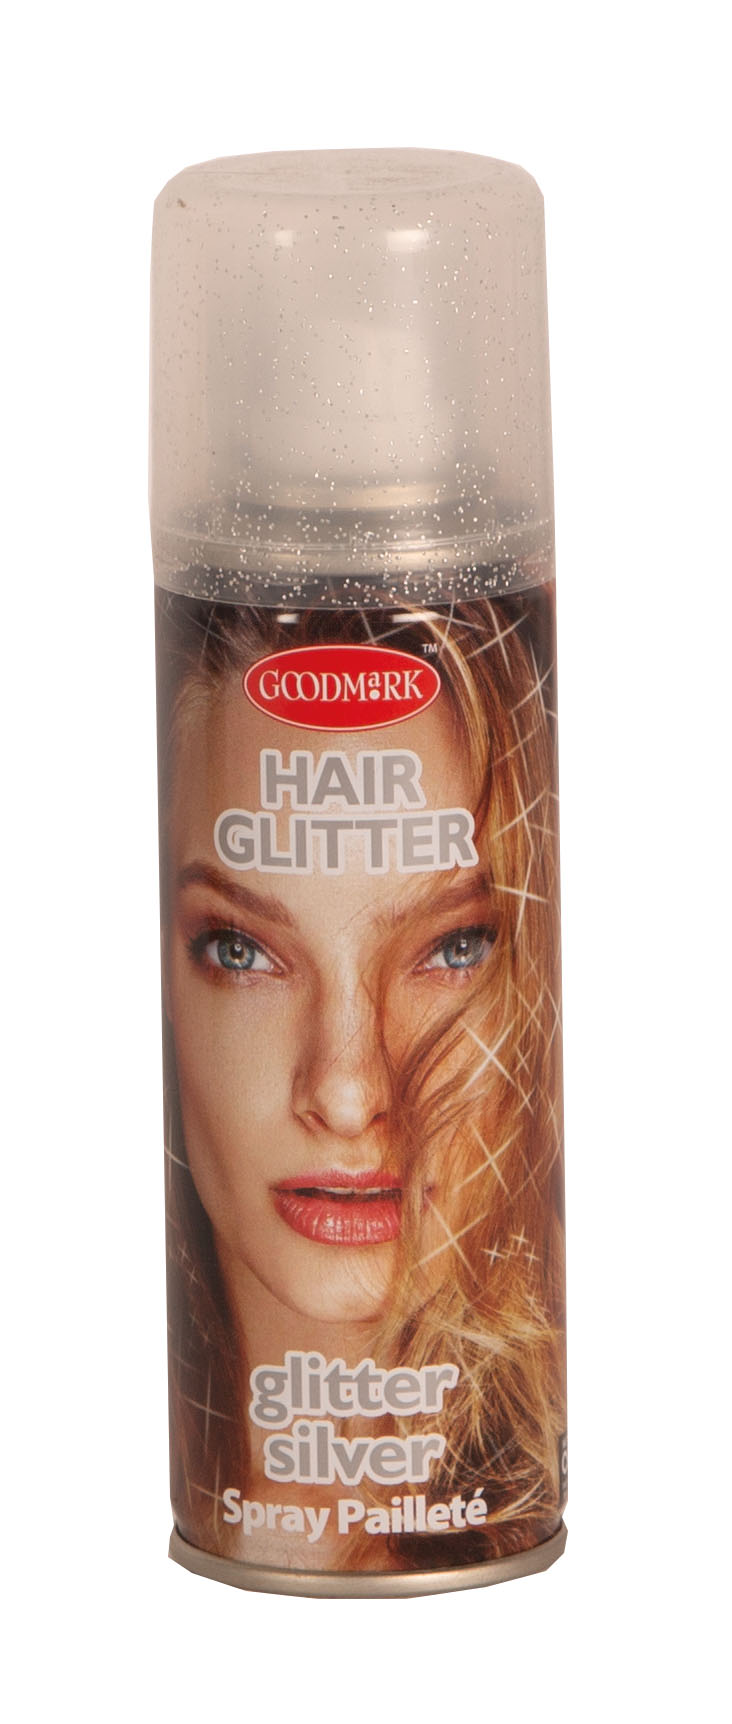 kapperszaak Berri drie Haarspray Zilver Glitter 125ml - Ooms Feestwinkel